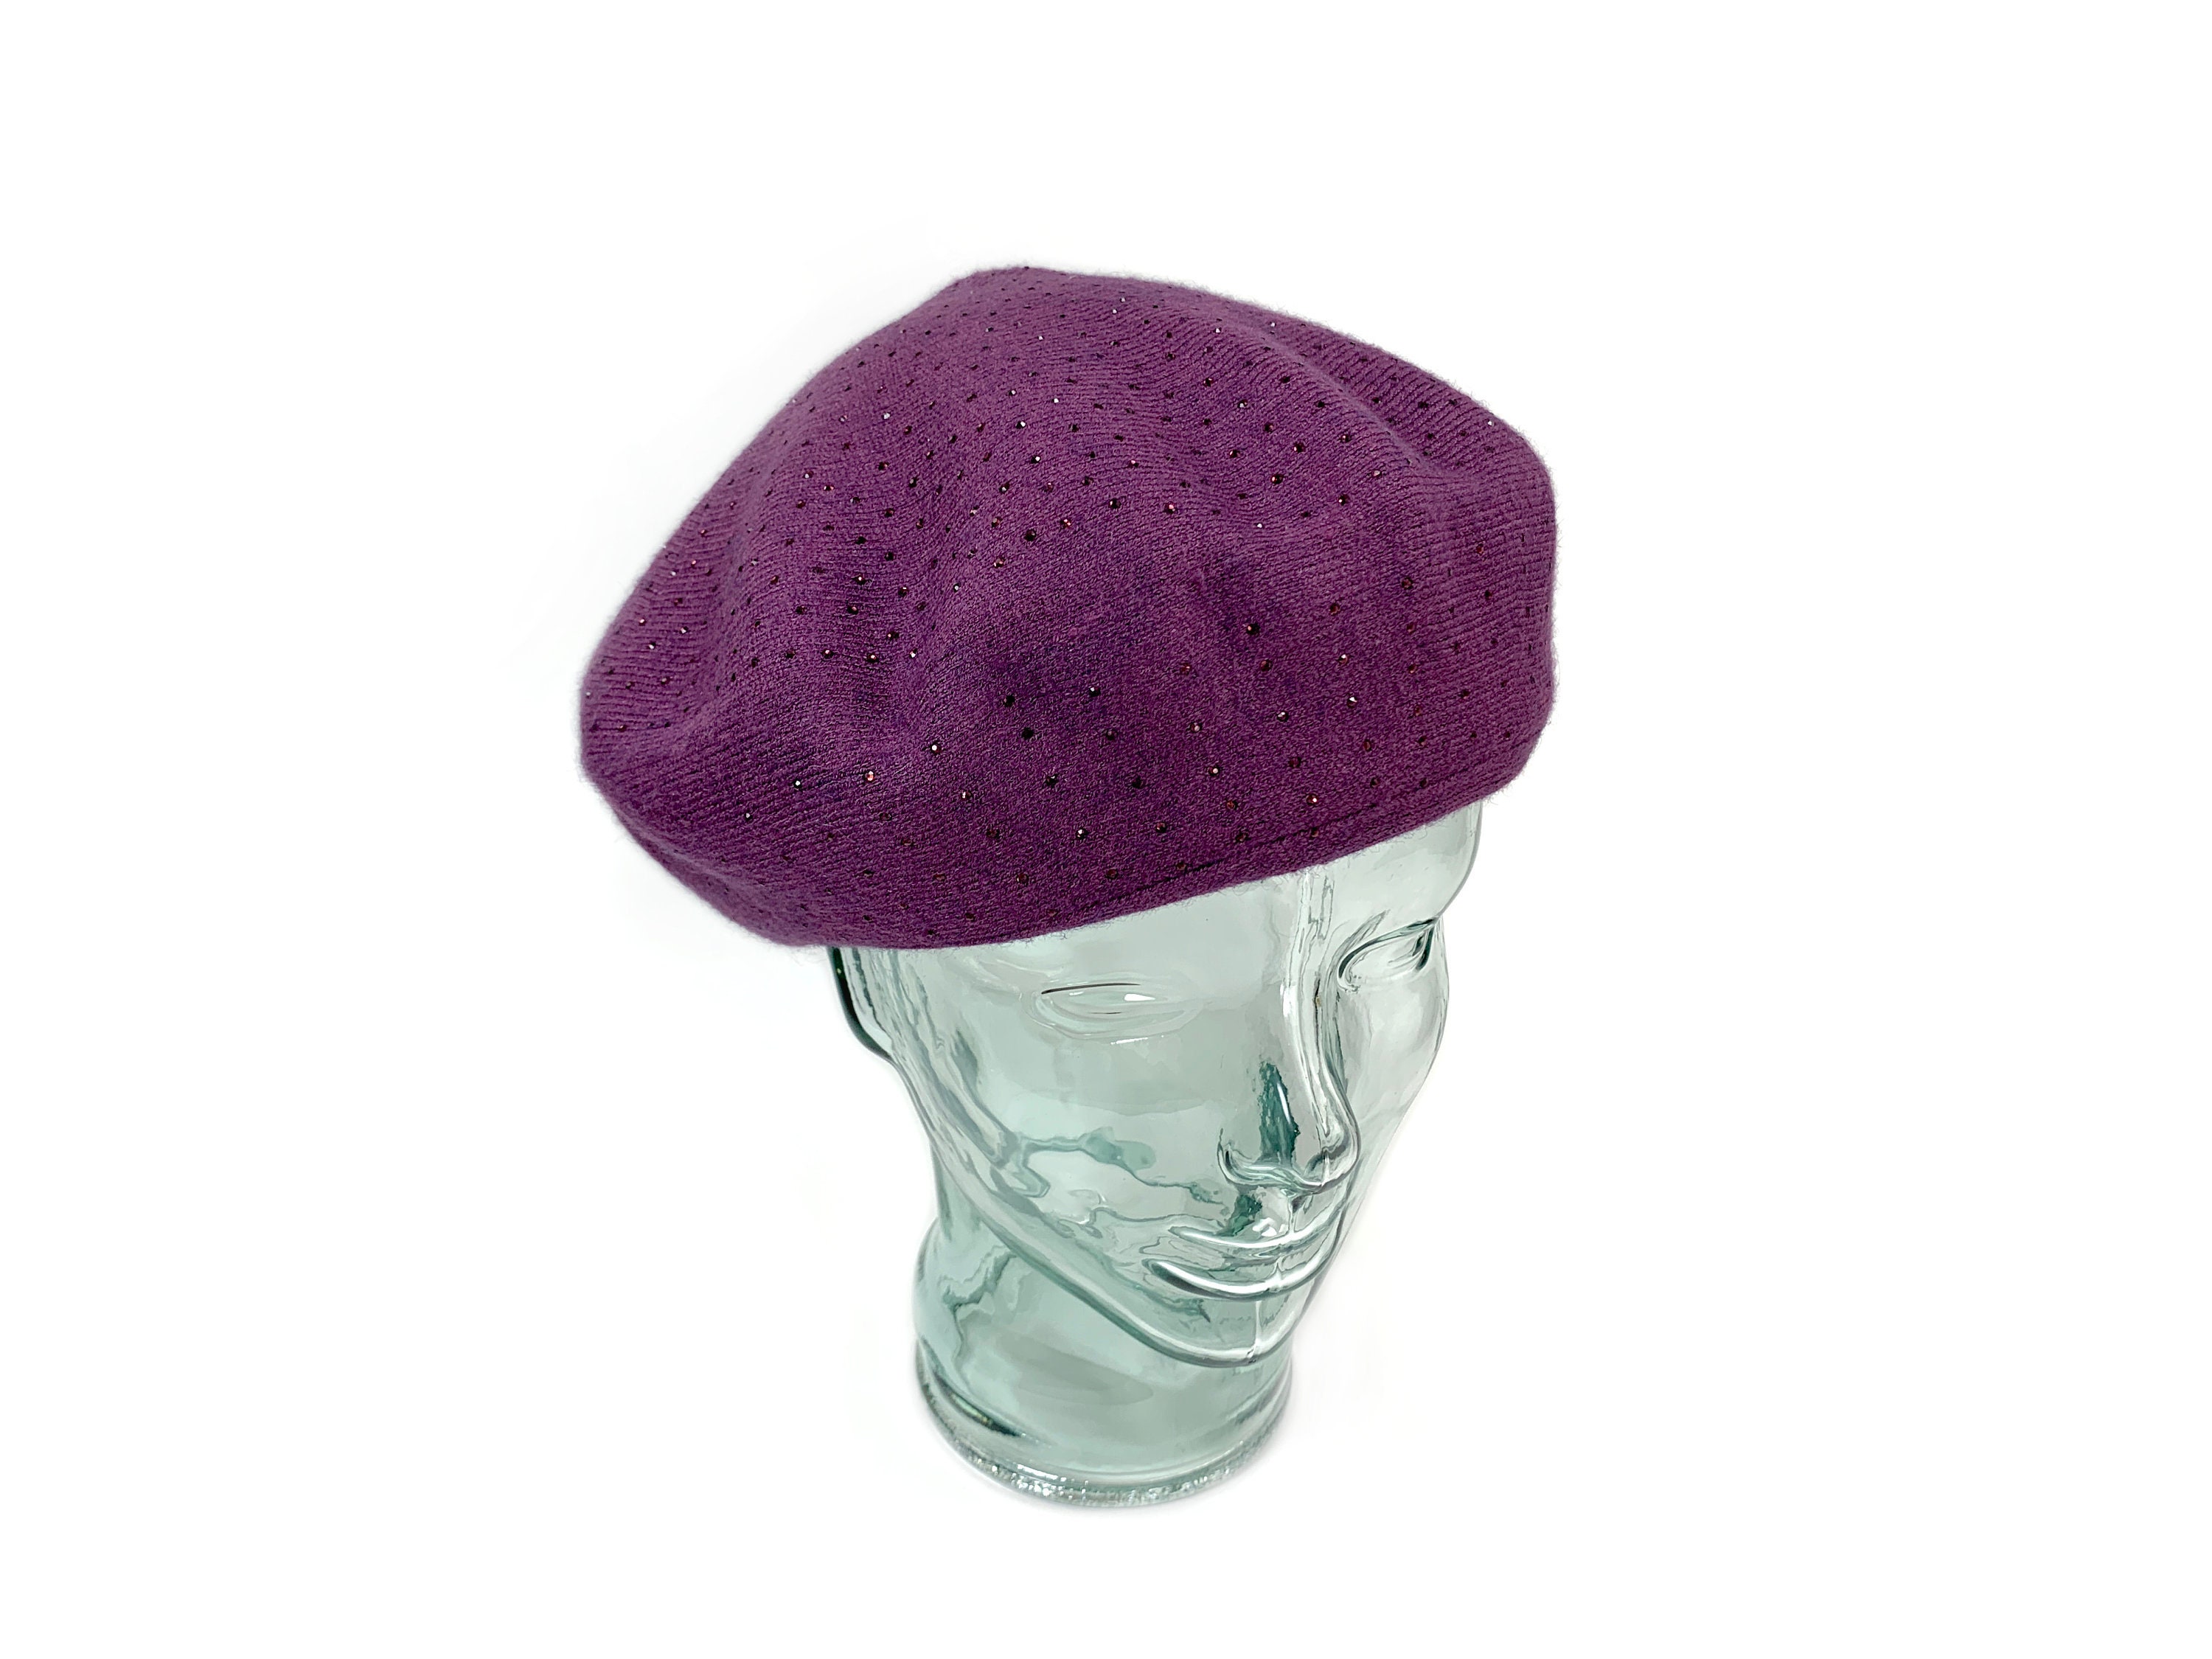 Purple Knit Beret, Cashmere Blend Beret With Sparkle, Reversible Soft Wool Beret, Retro Style Purple Winter Hat For Women